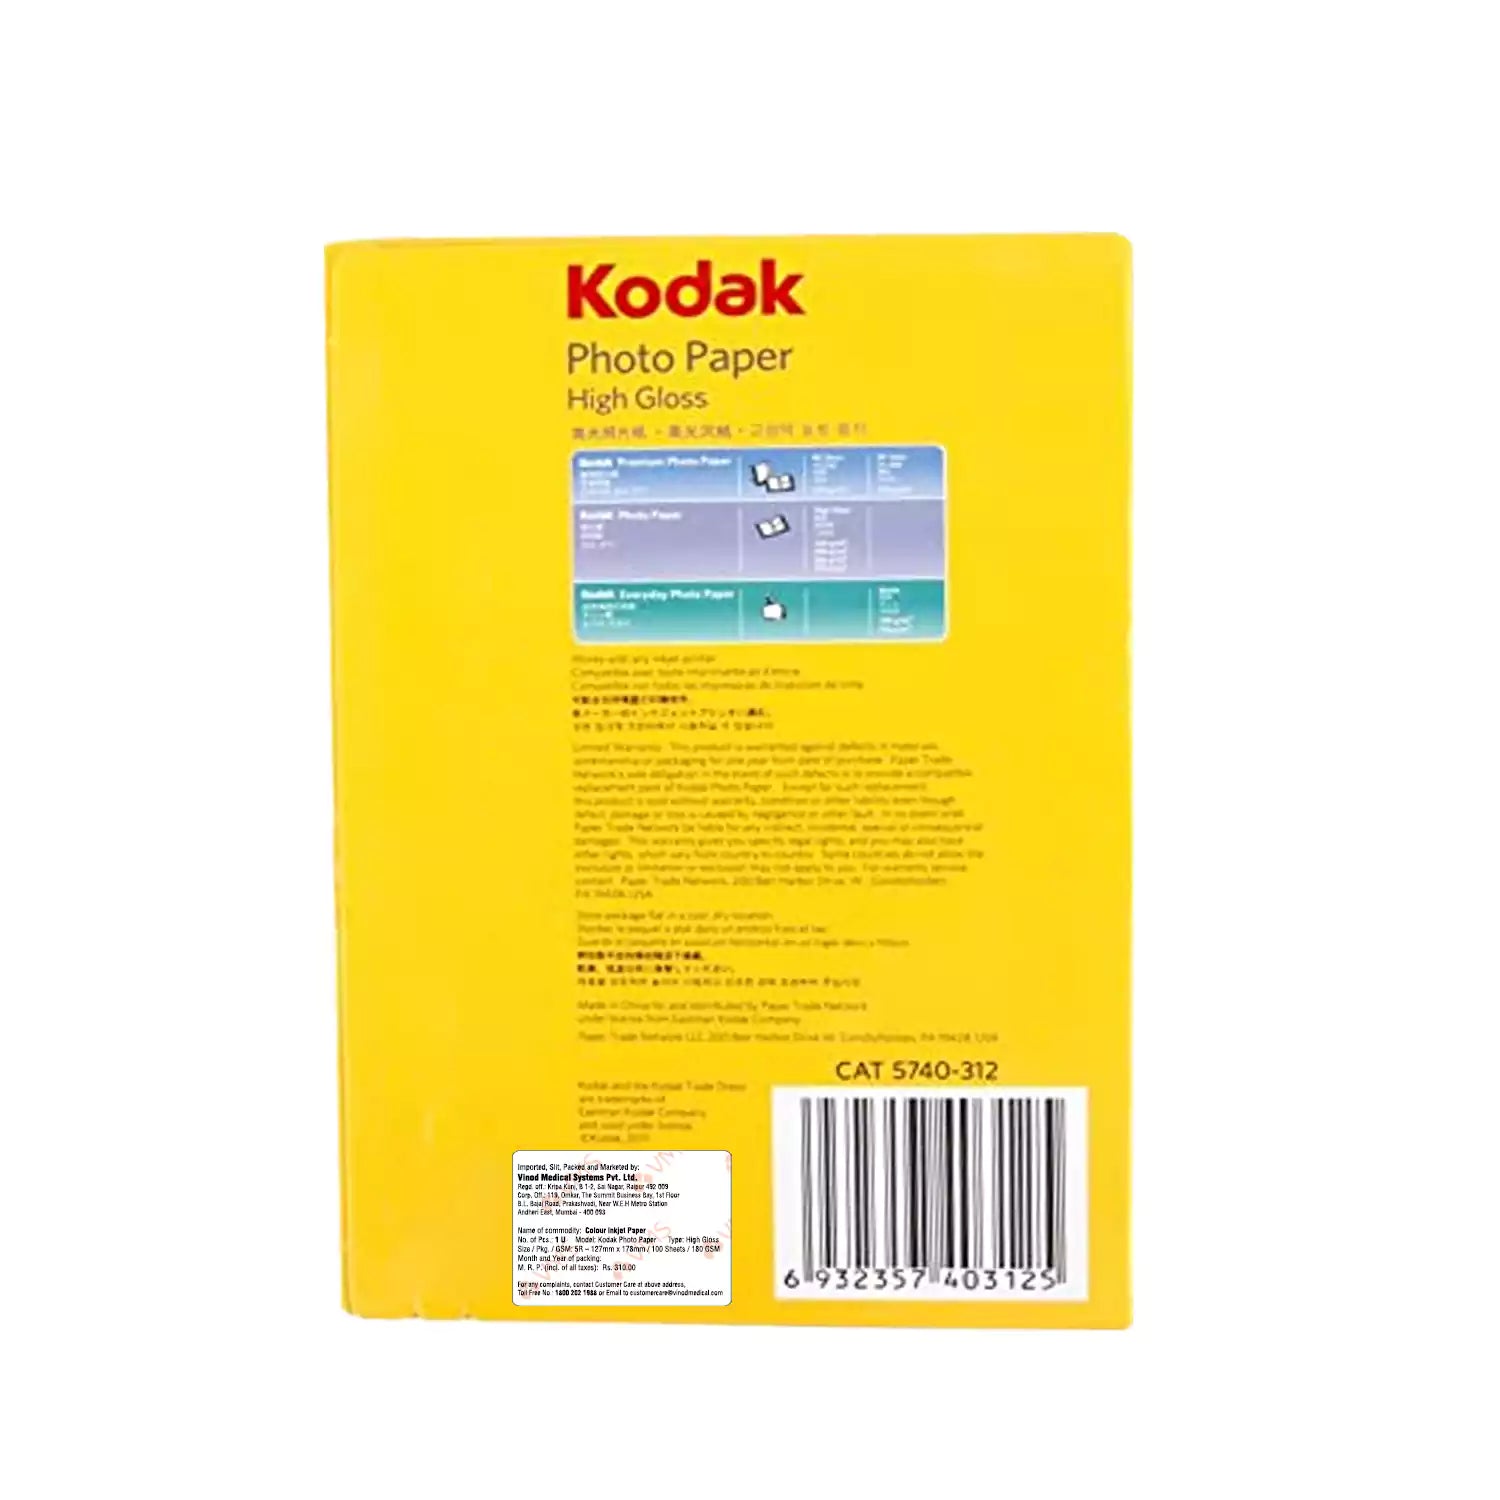 KODAK 180 GSM 5R (5 x 7) Photo Paper High Glossy